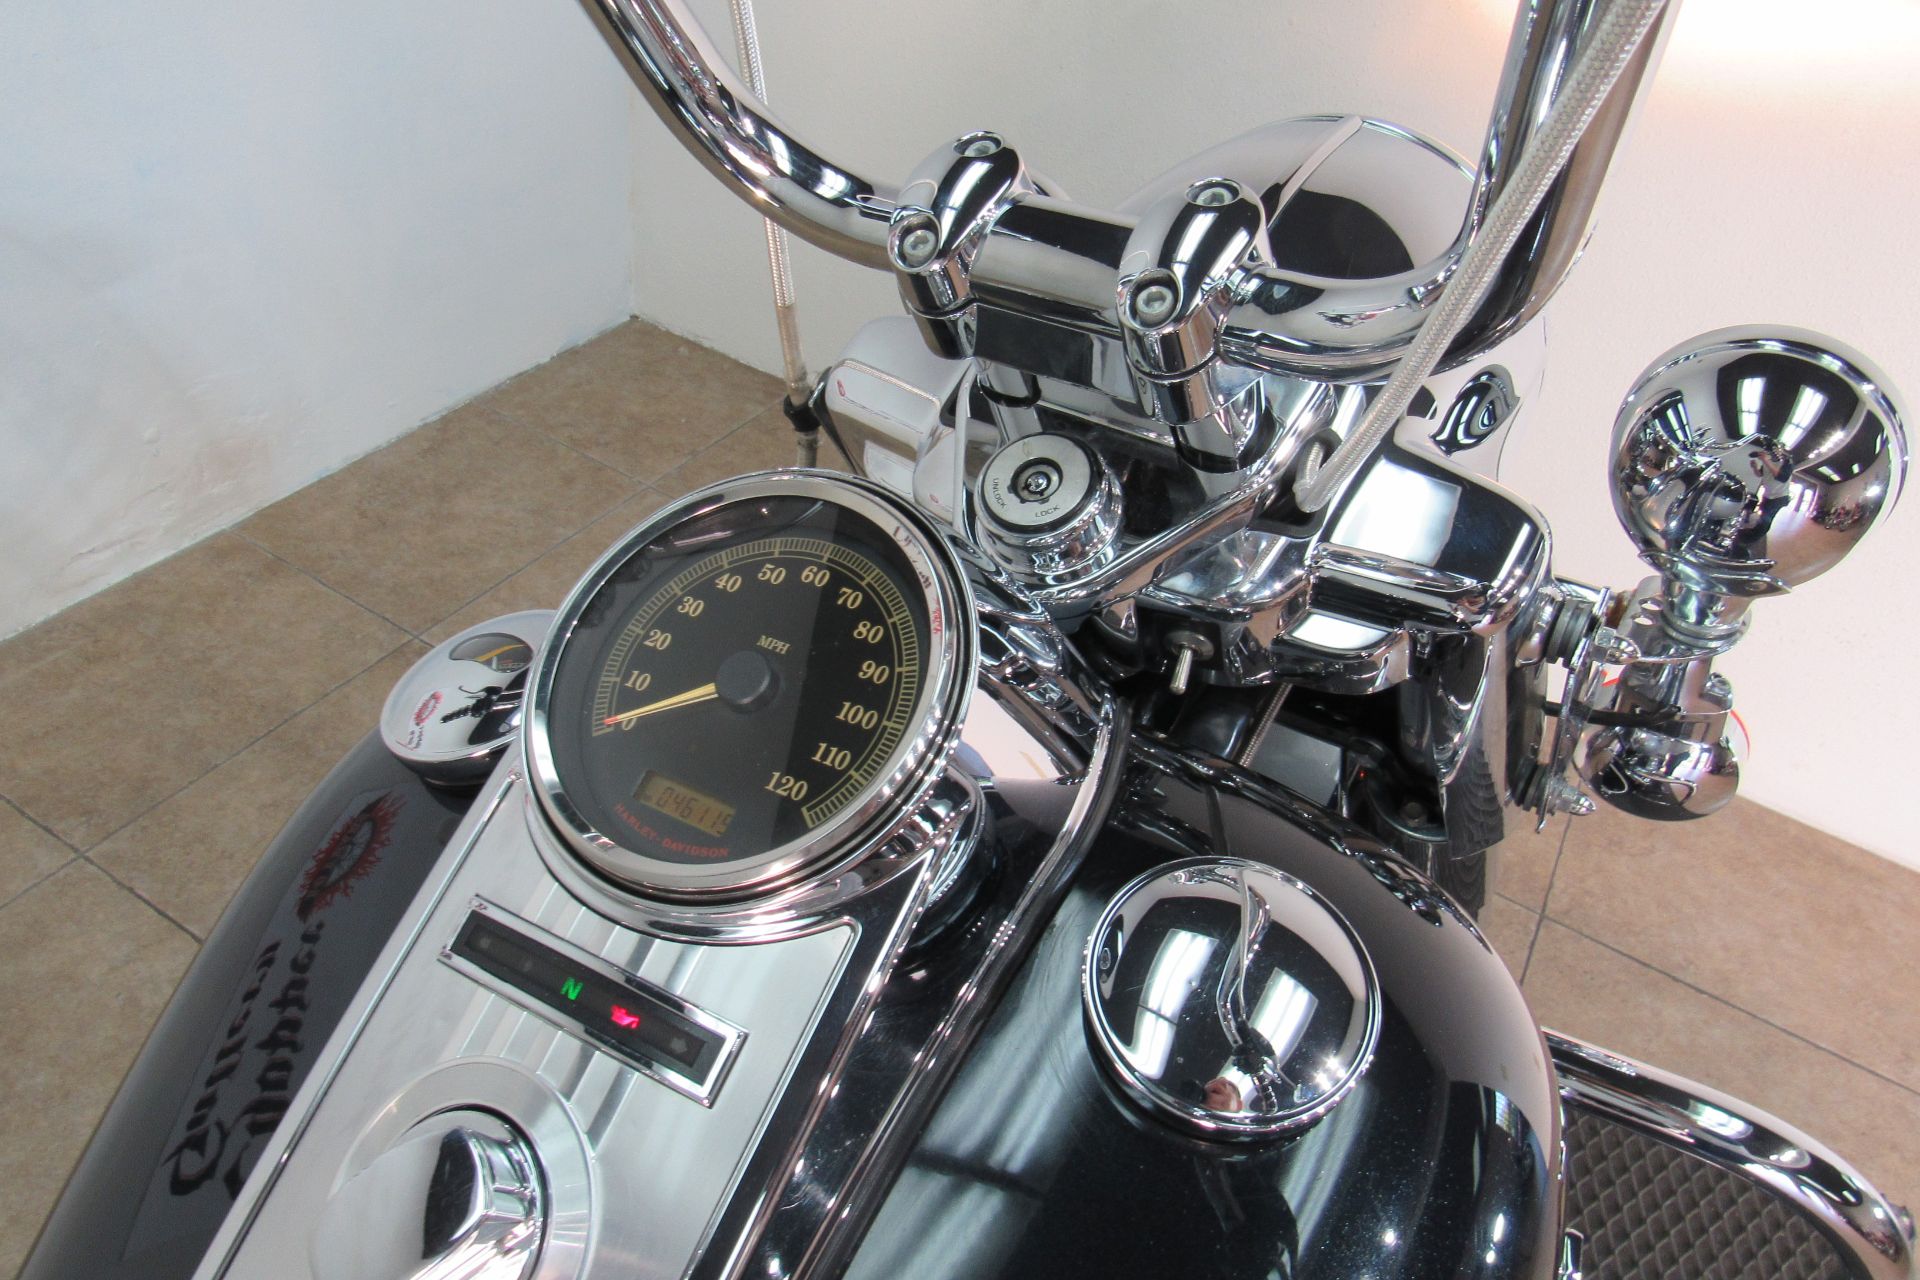 2012 Harley-Davidson Road King® Classic in Temecula, California - Photo 22